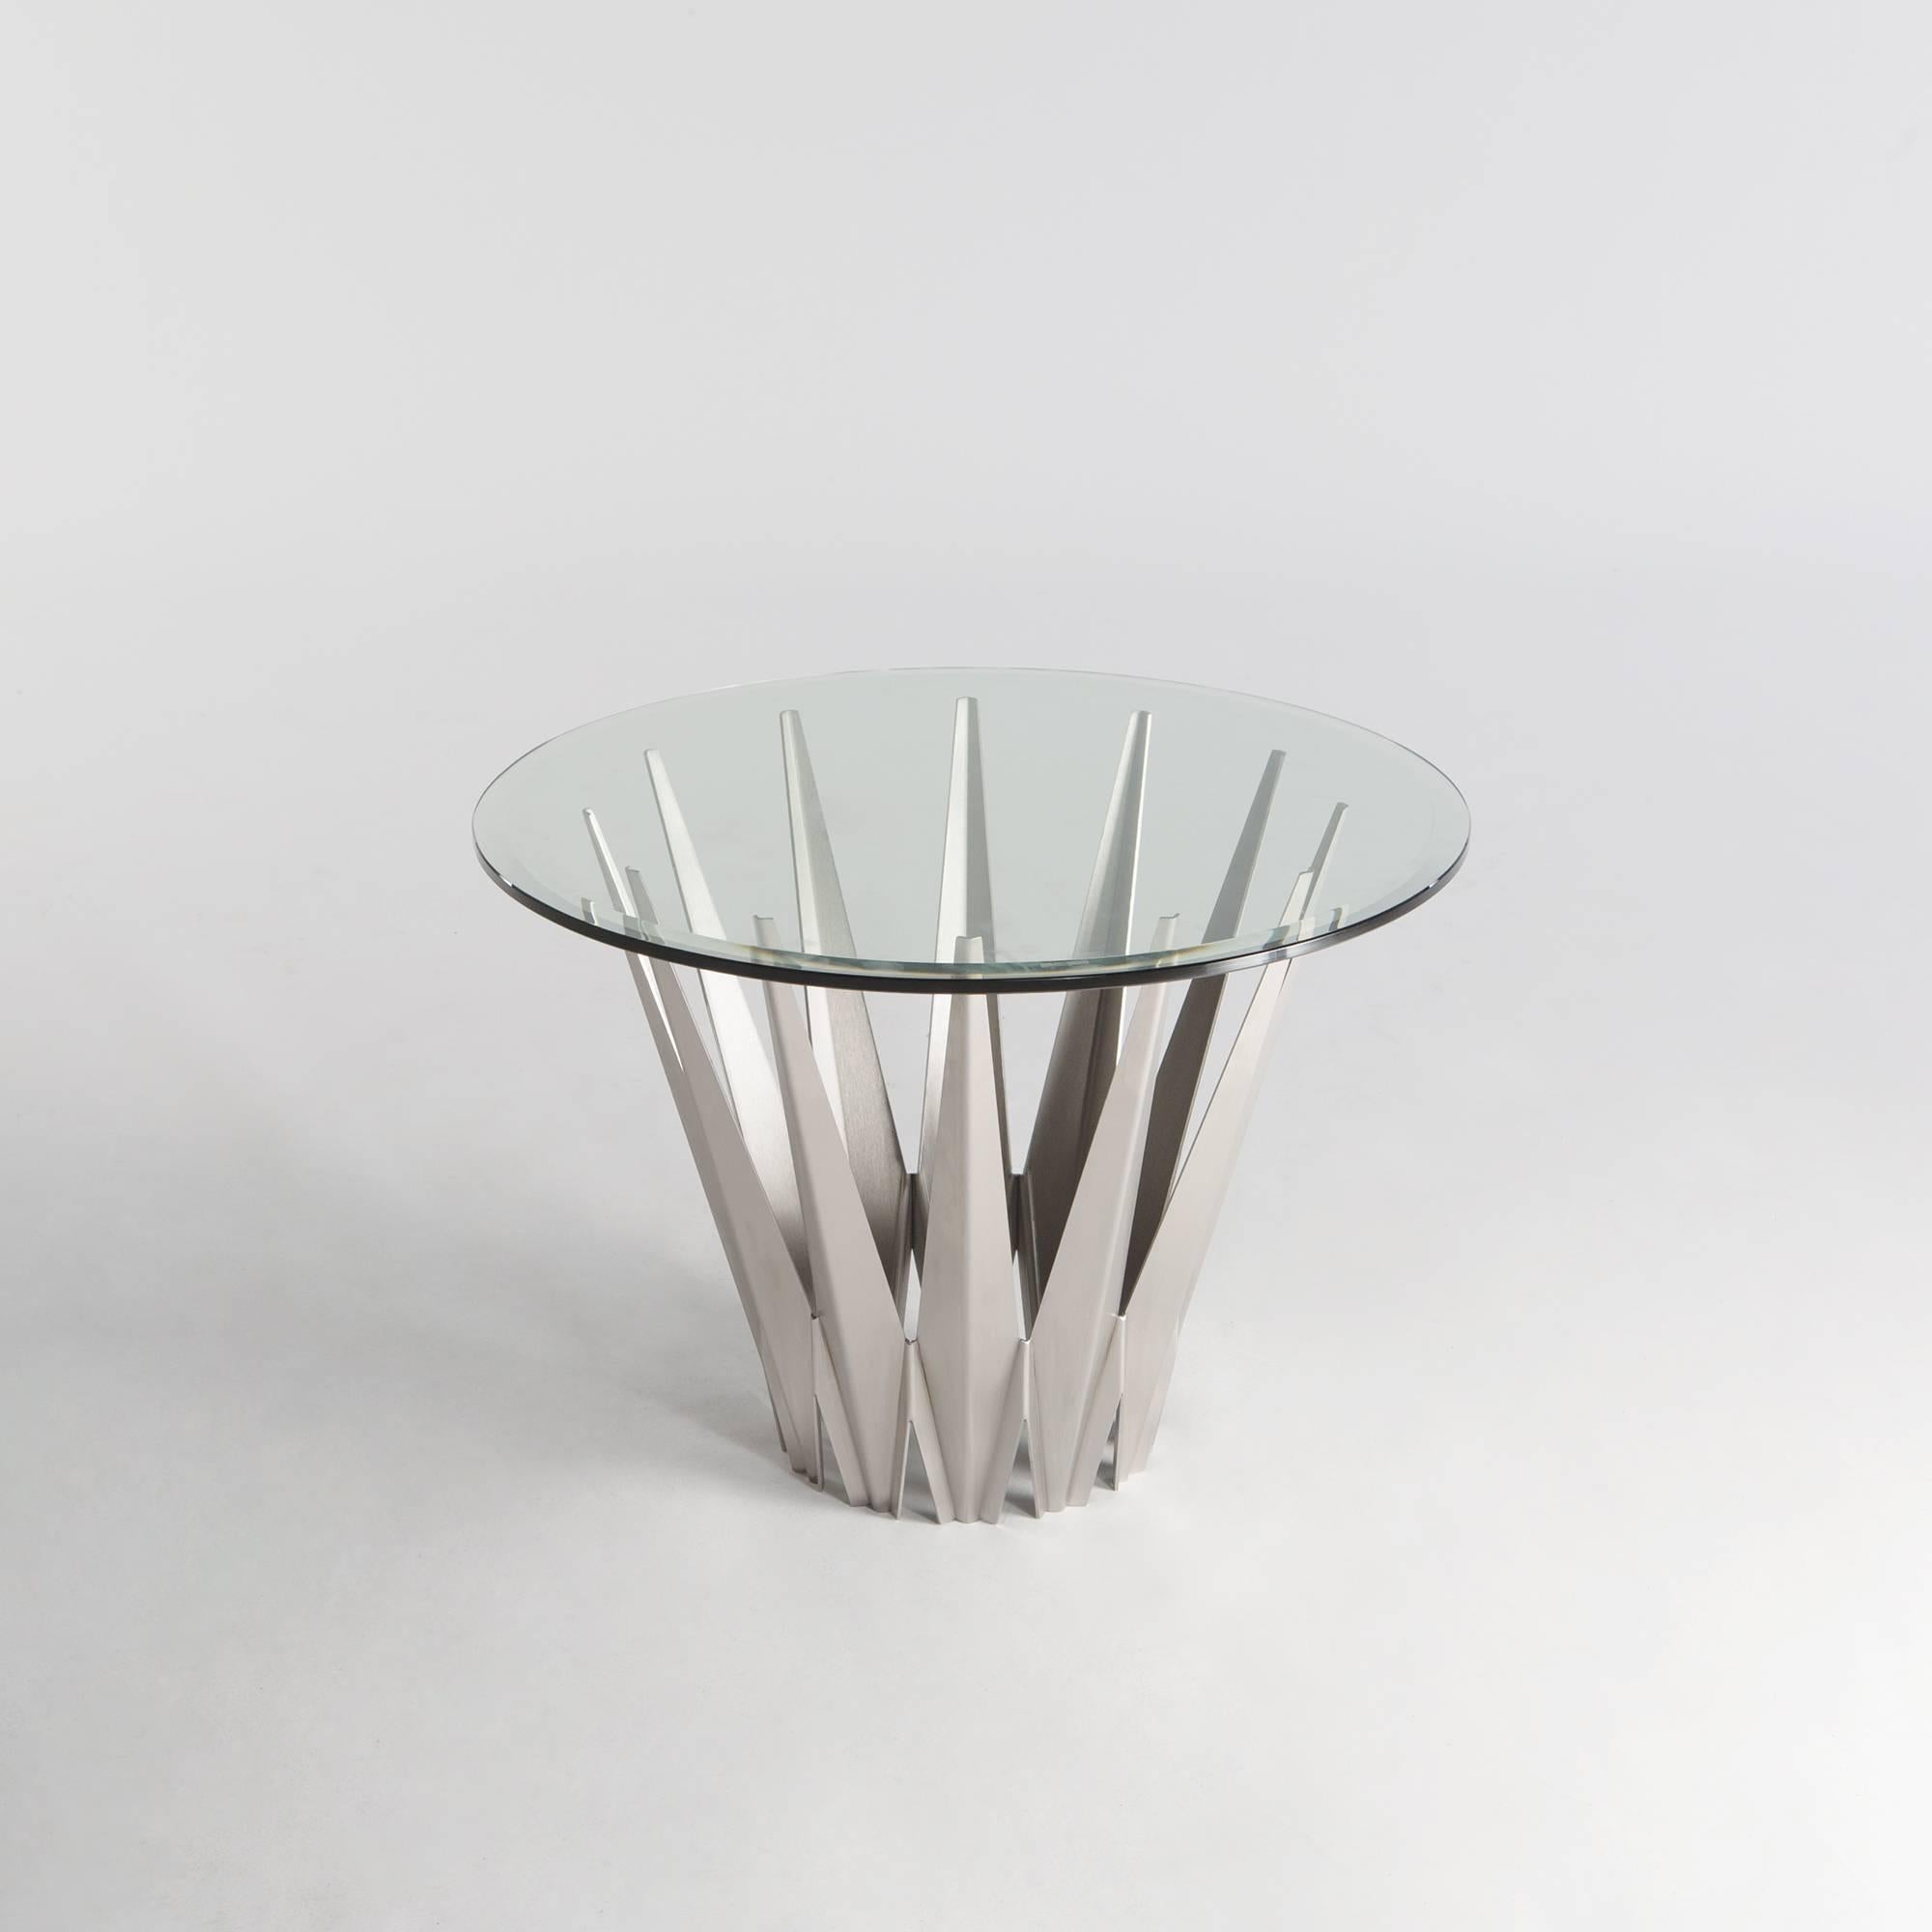 Krystalline Custom Stainless Steel Table Base / Made to Order 7